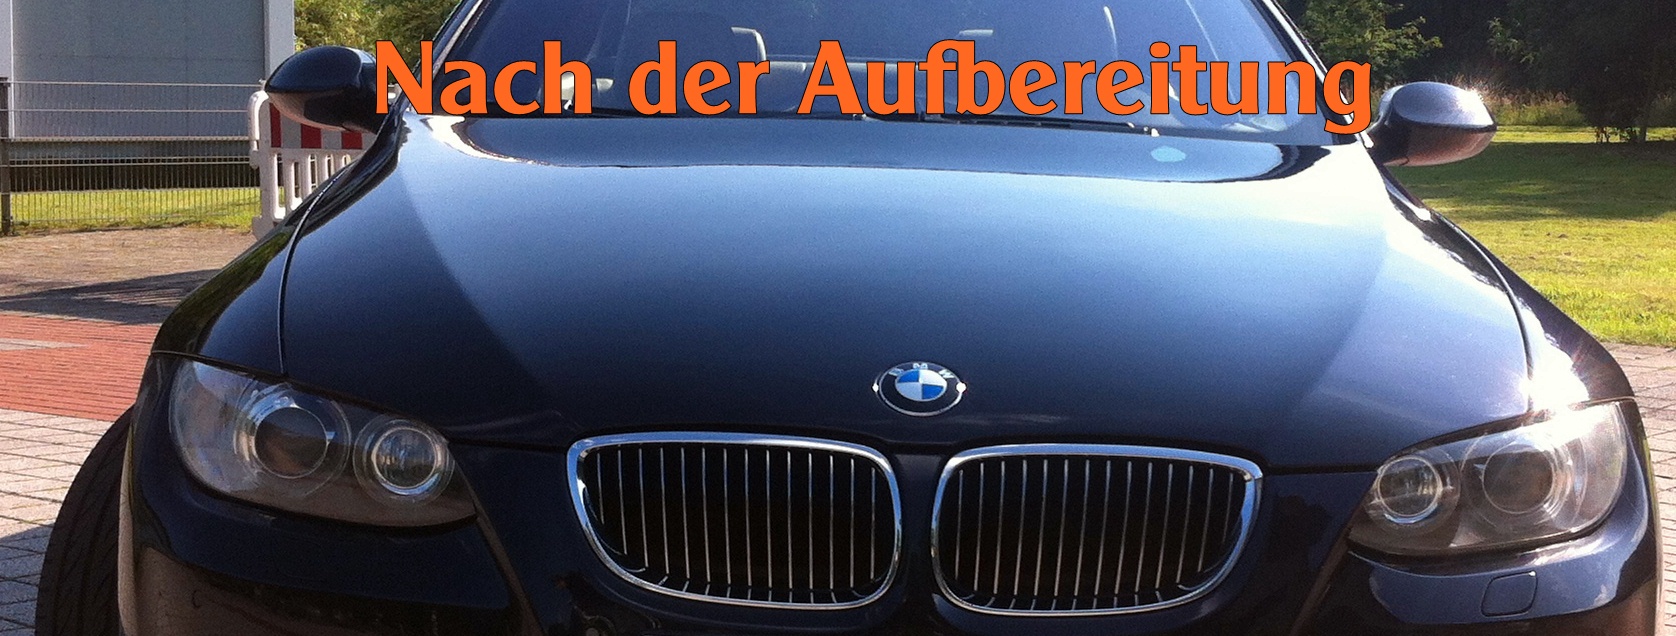 Aufbereitung Fahrzeugverkauf Lack nach Aufbereitung durch ADRM.eu in Bensberg